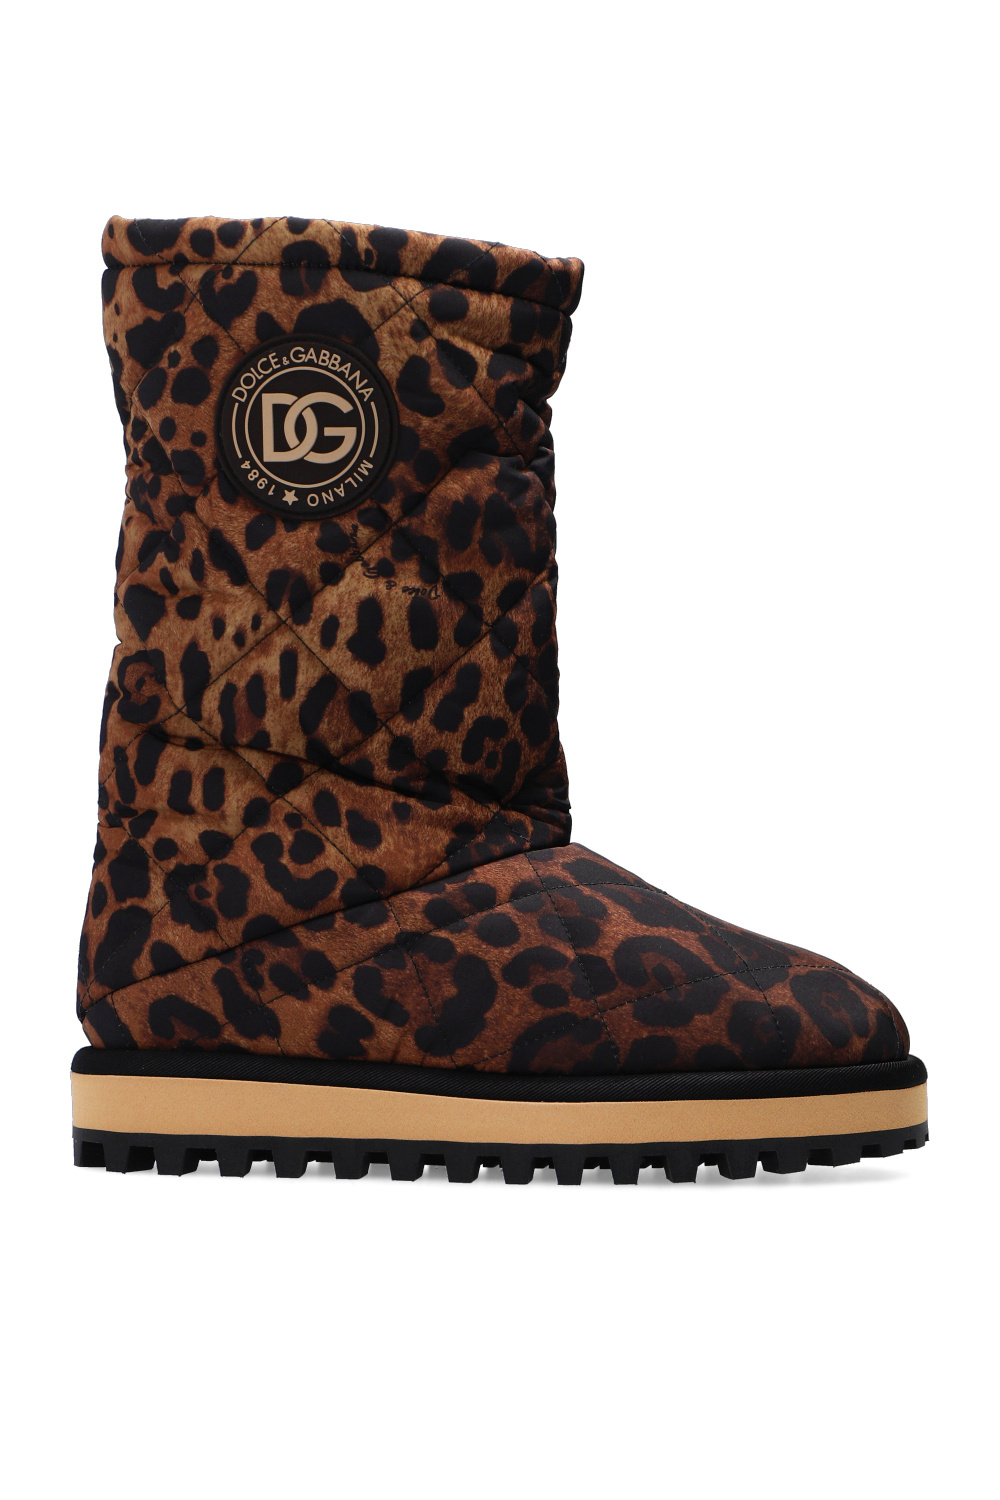 Dolce & Gabbana Waterproof snow boots | Women's Shoes | Vitkac